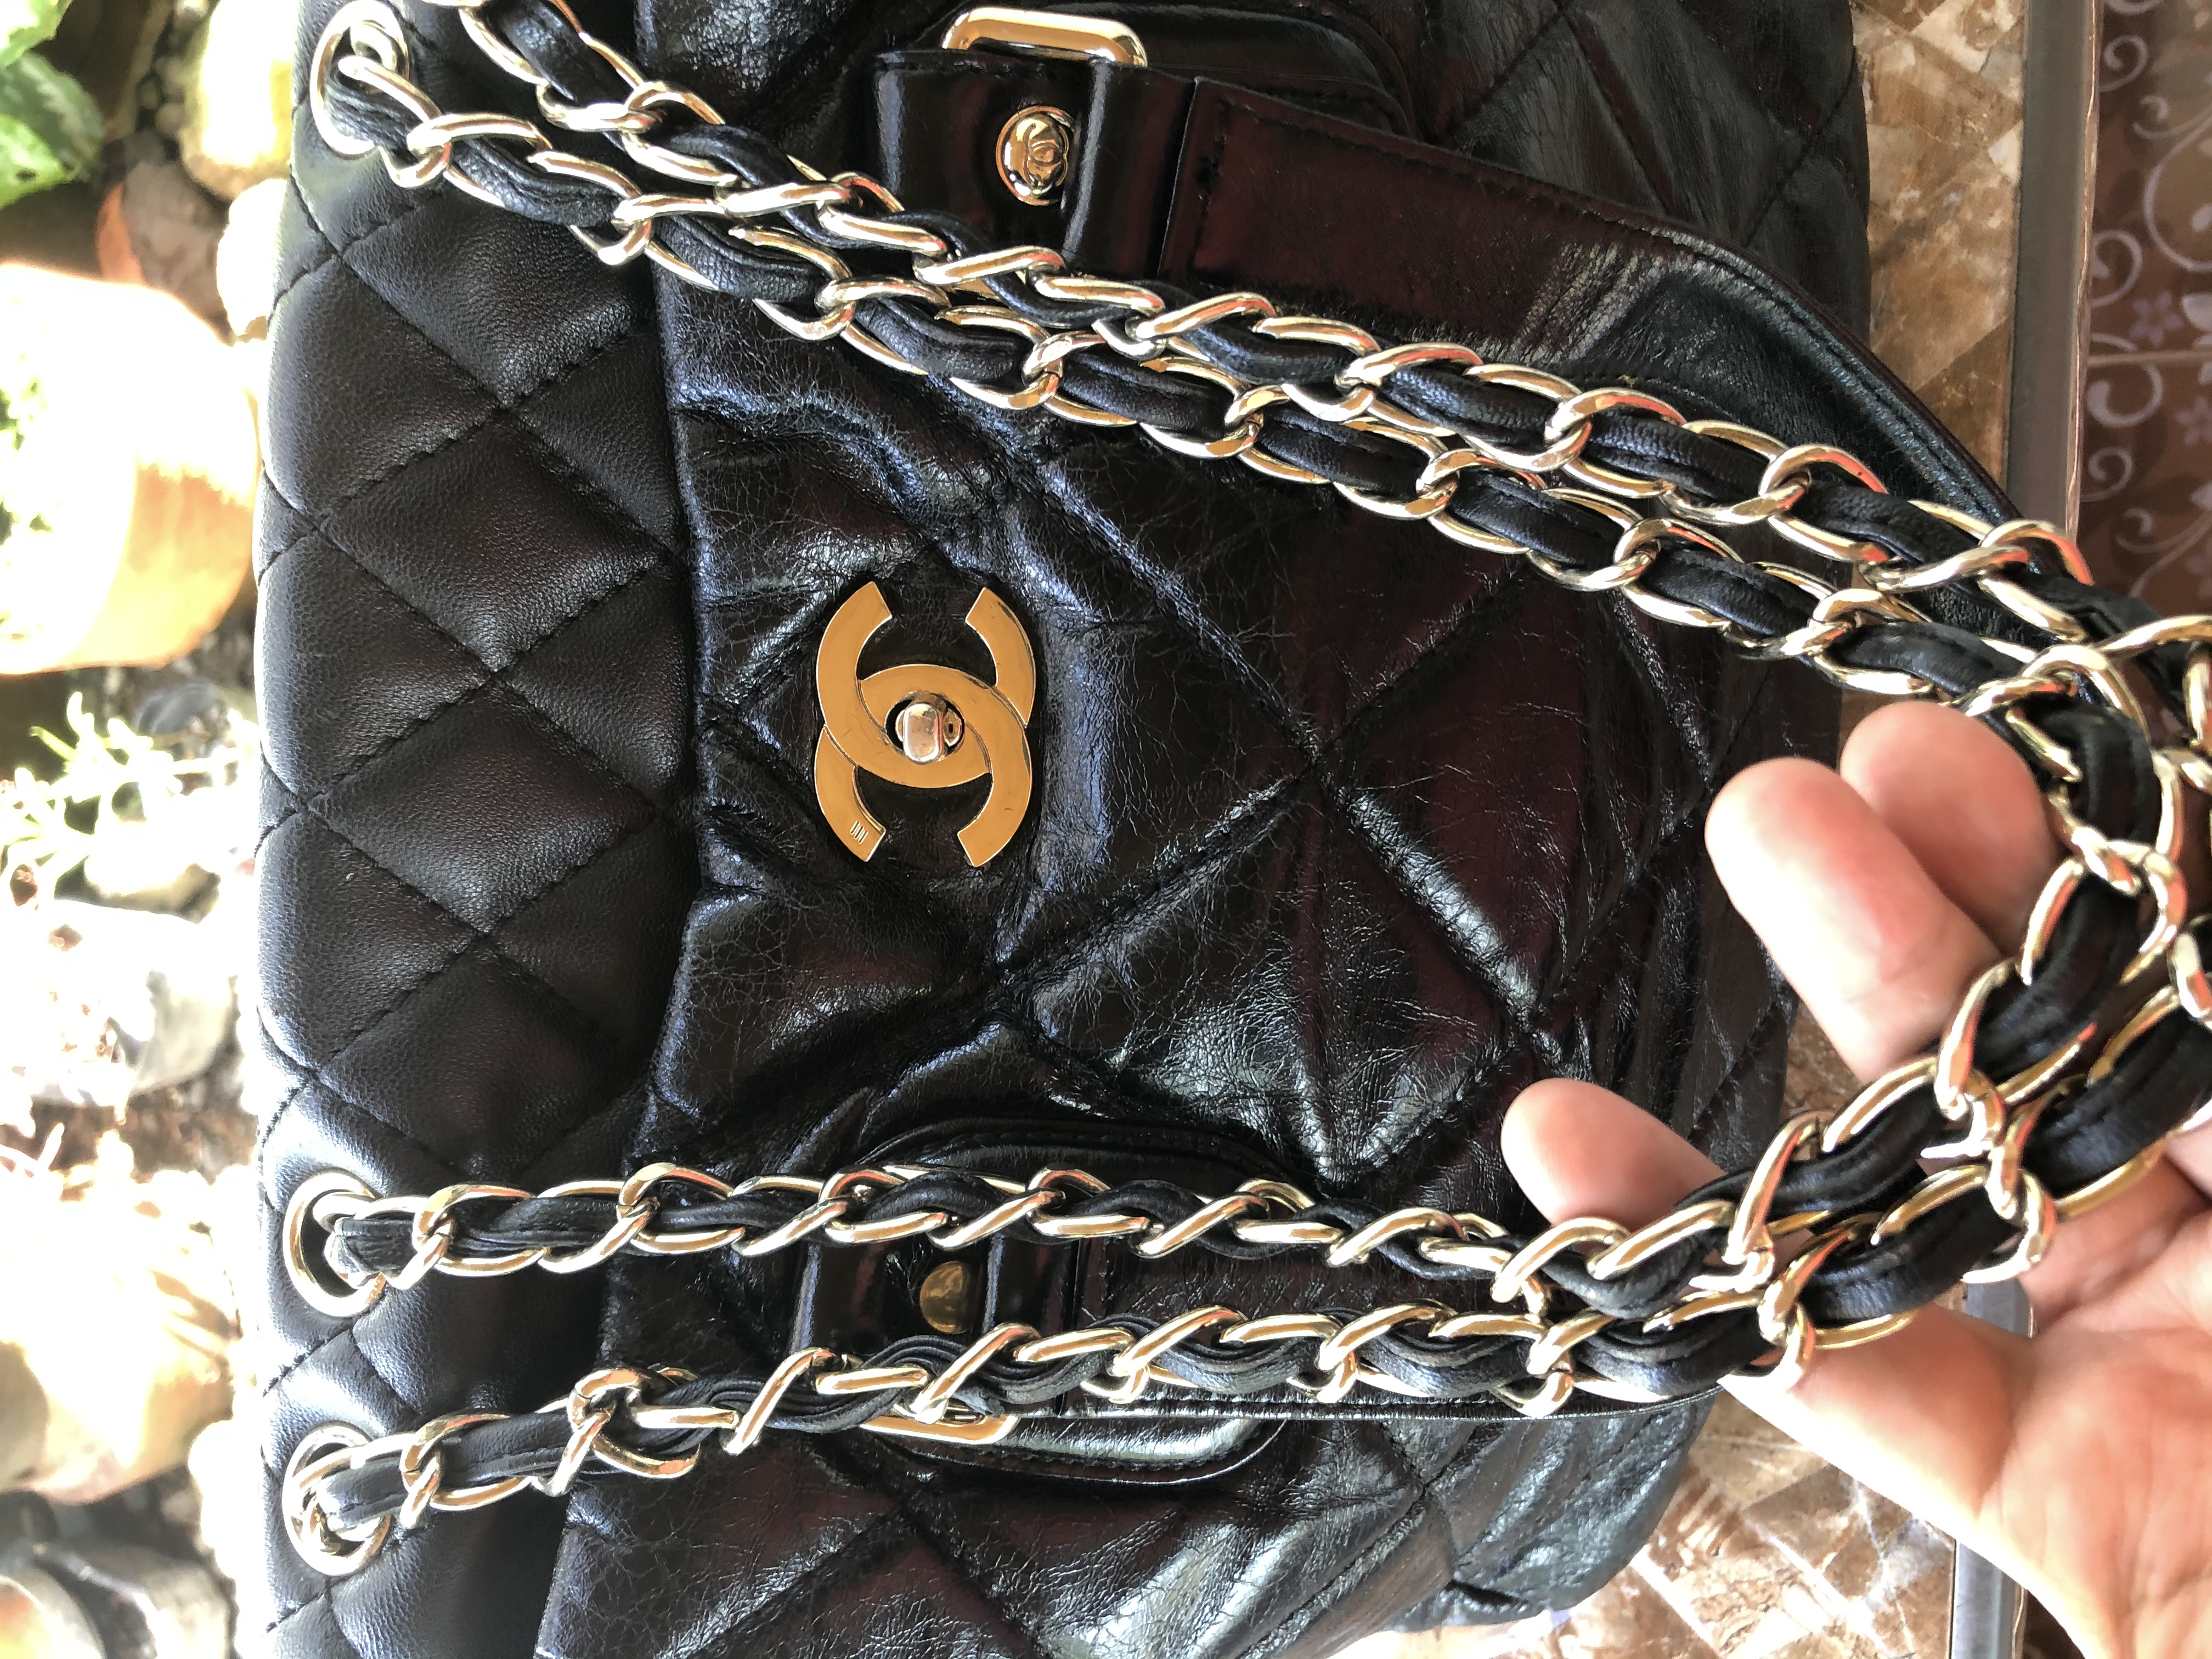 chanel inspired handbags